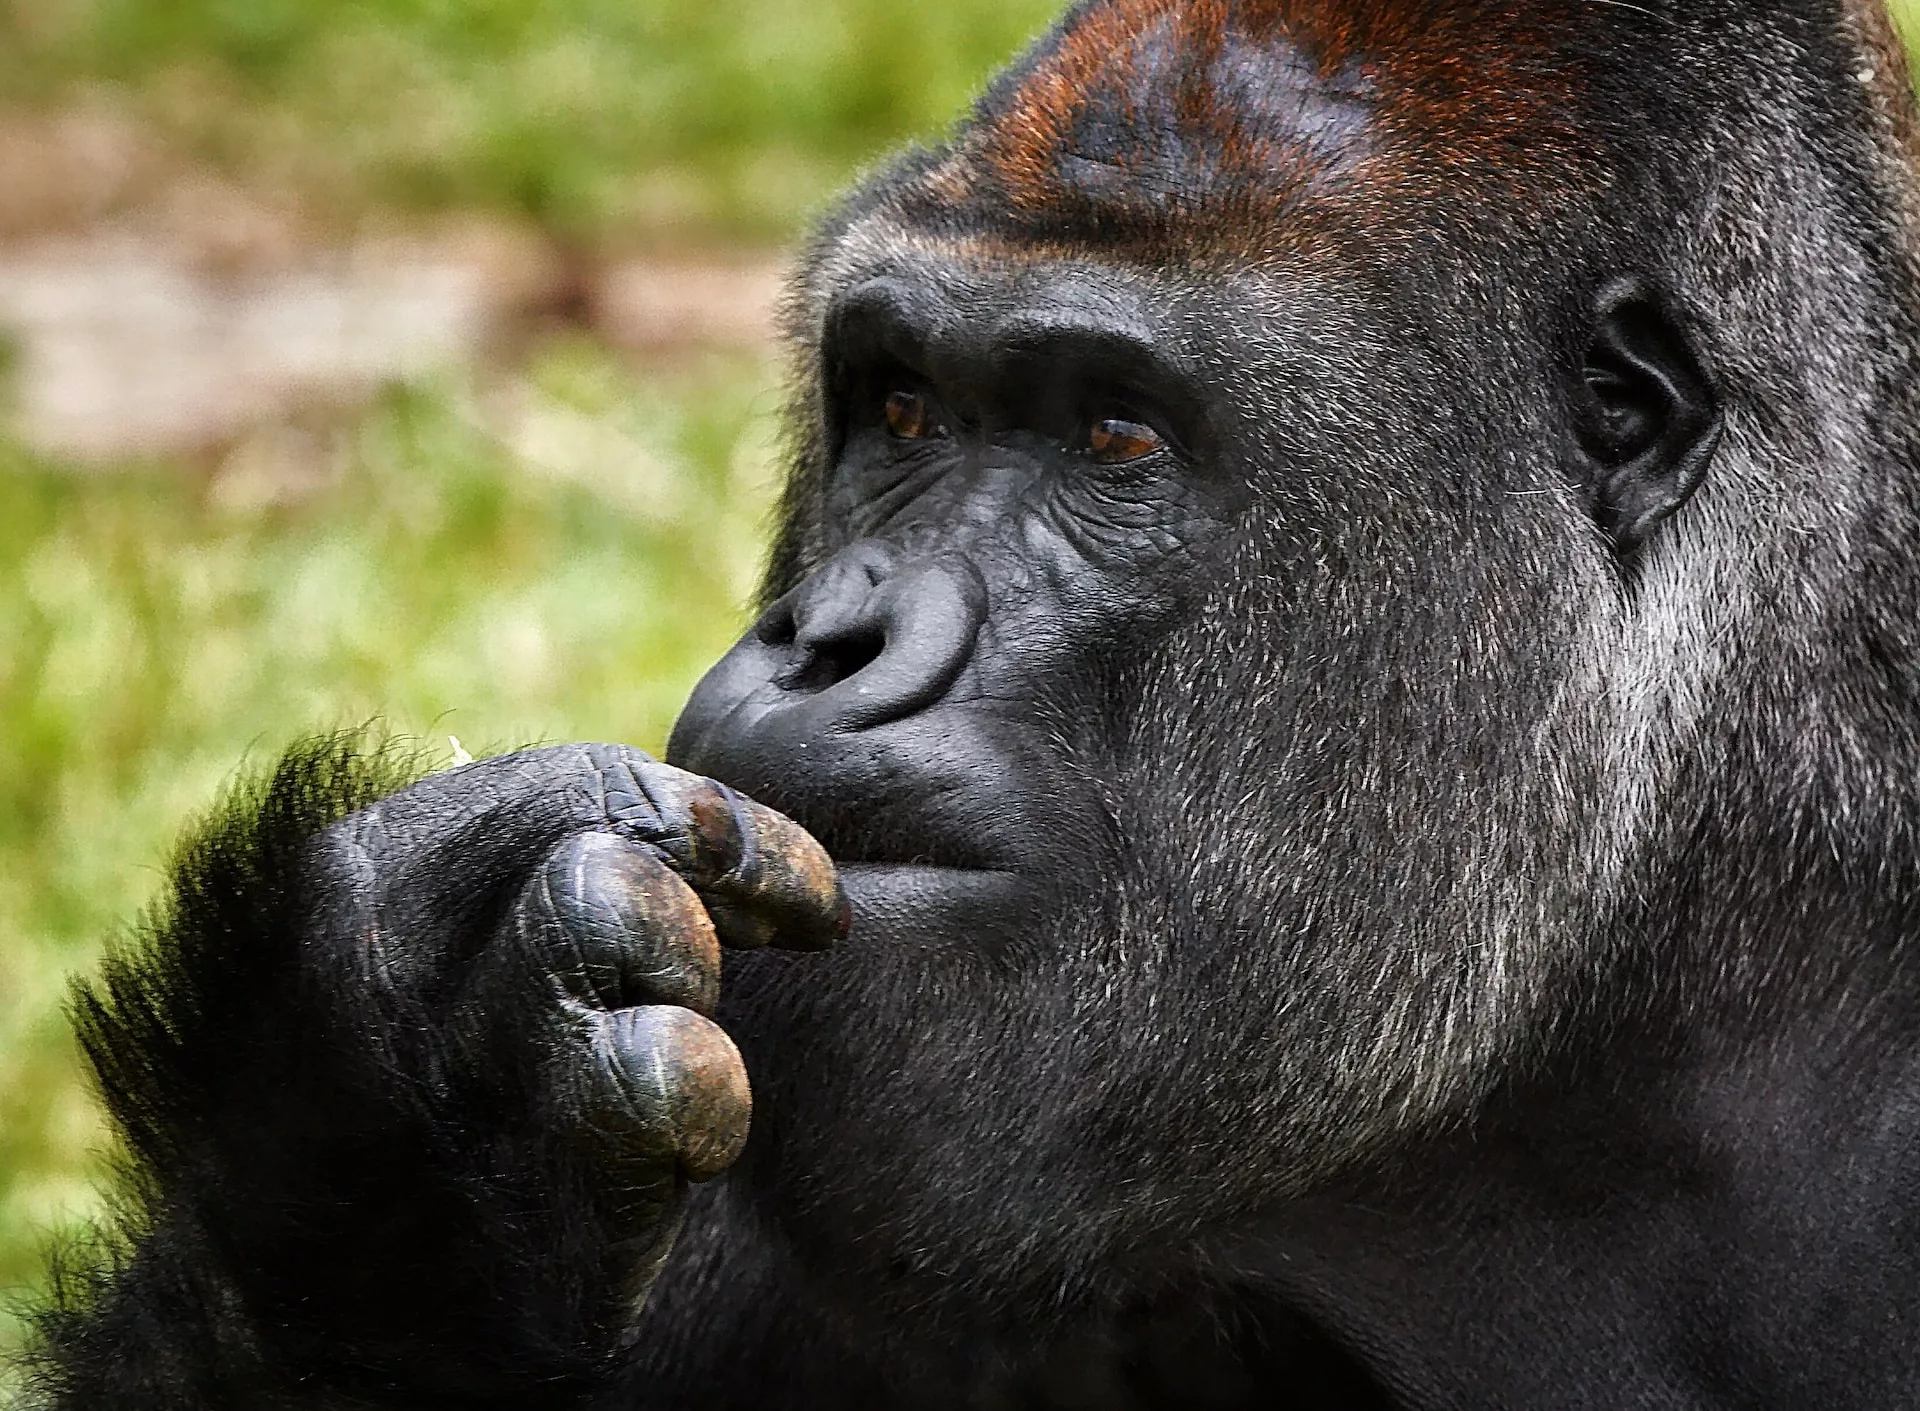 image of a Gorilla